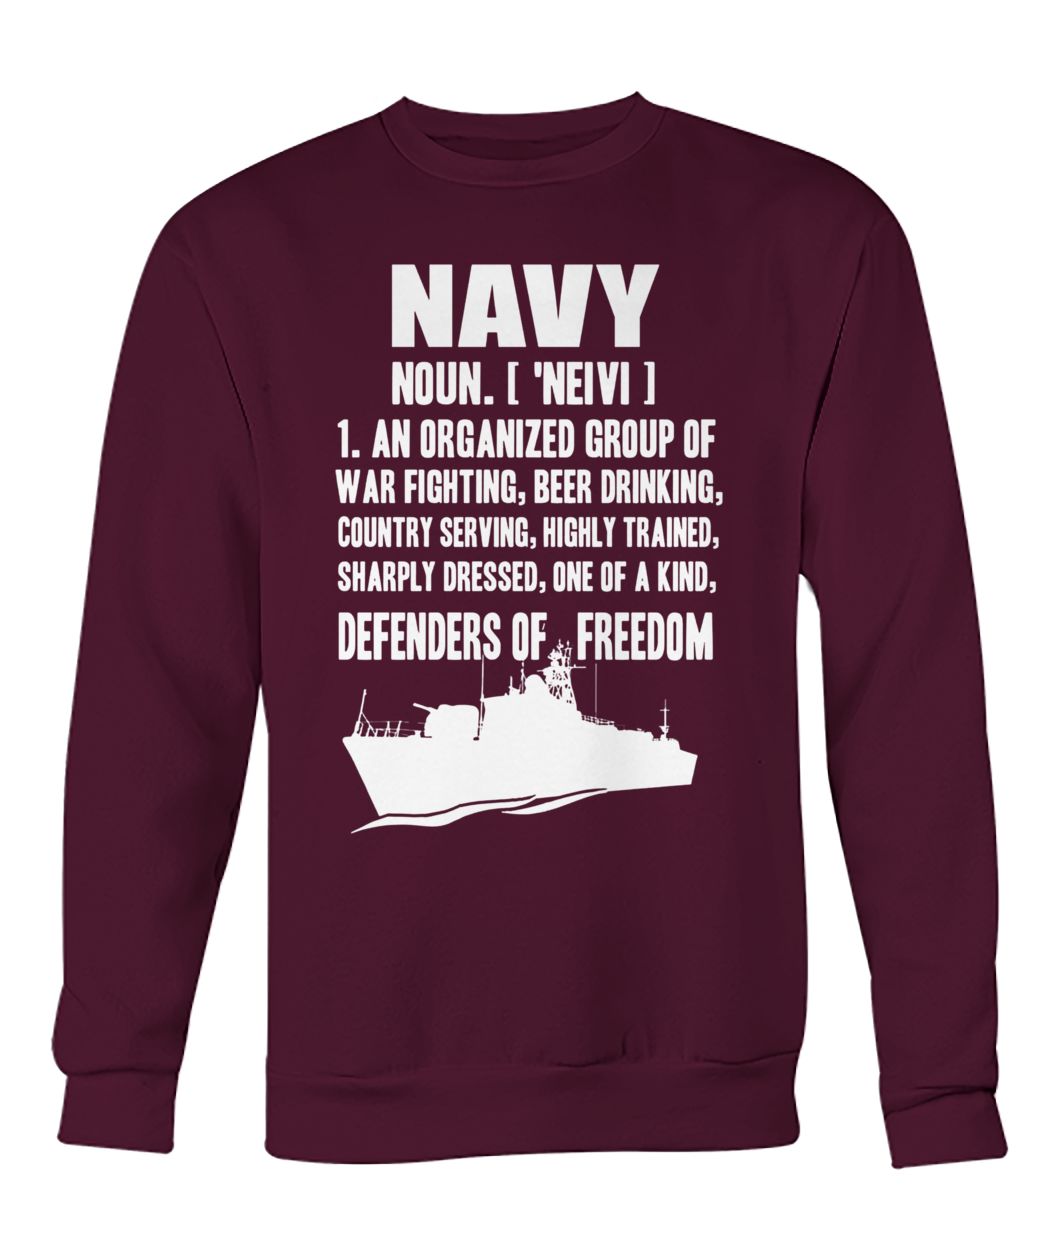 Navy definition crew neck sweatshirt